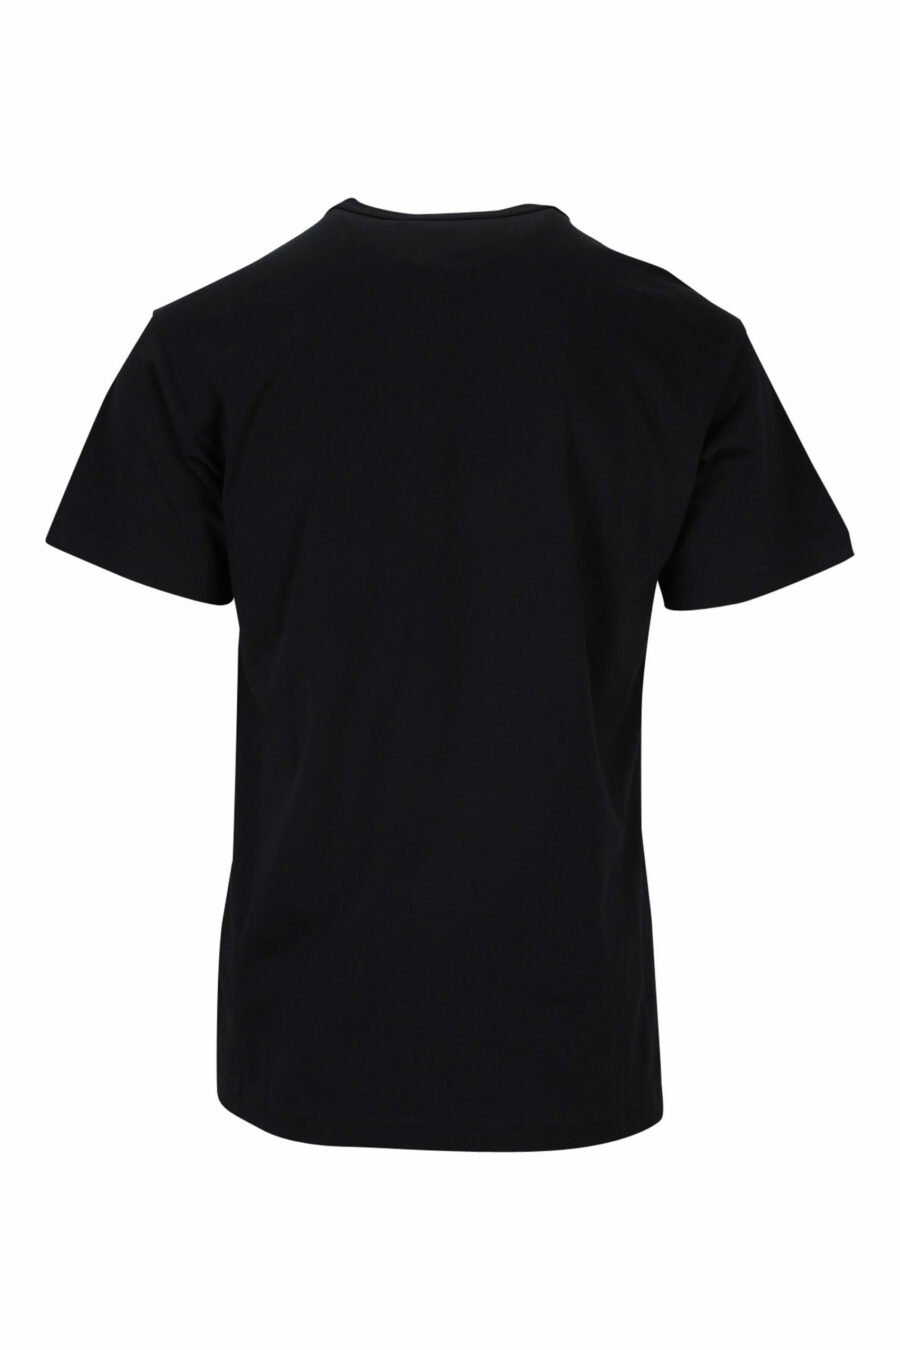 Black T-shirt with circular baroque maxilogo - 8052019477481 1 scaled